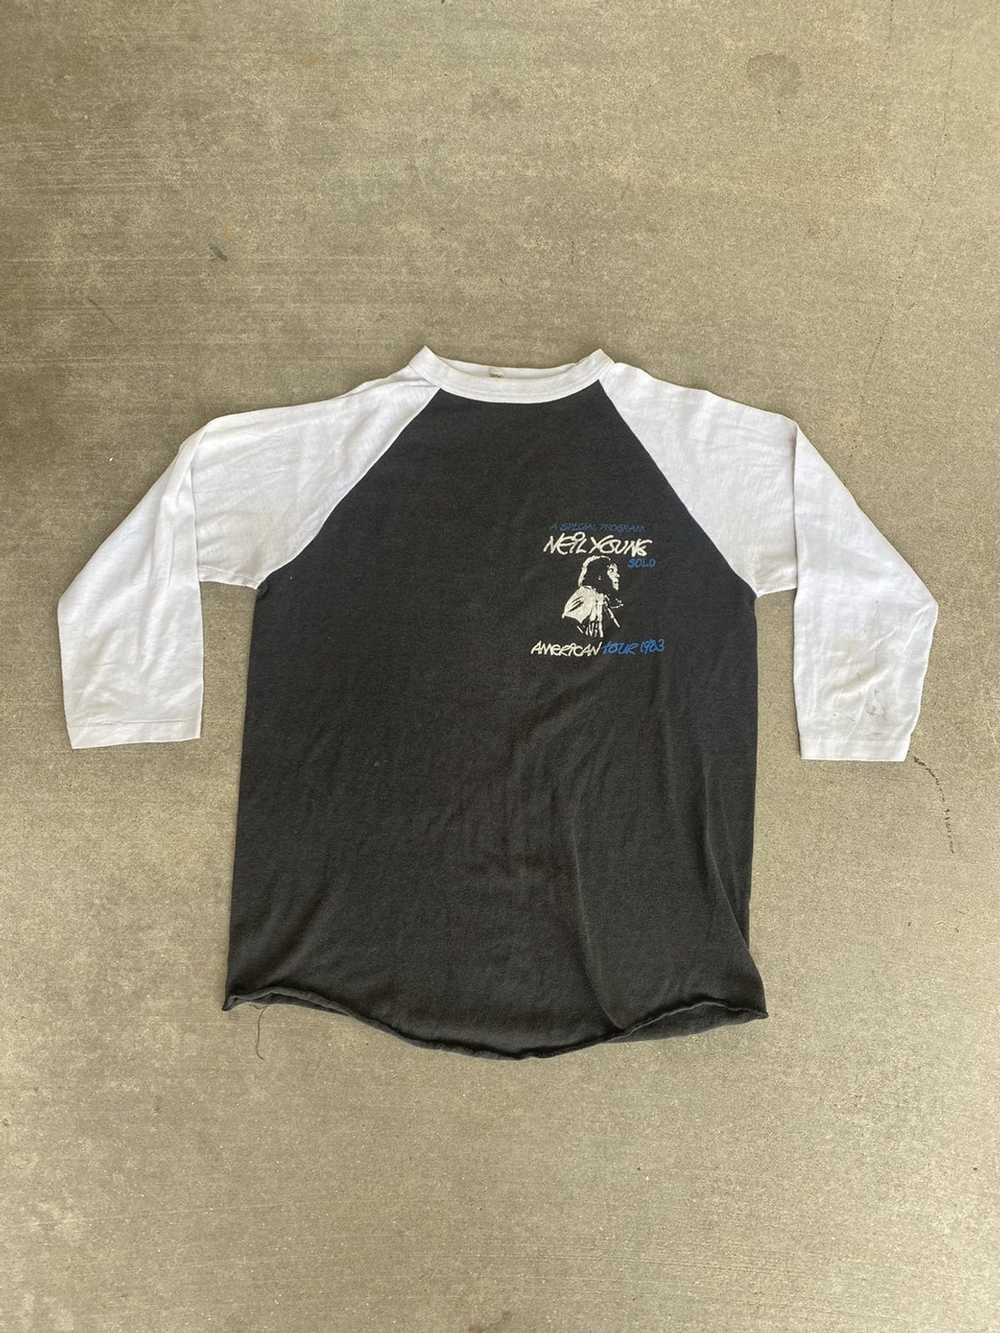 Band Tees × Vintage 1983 Neil Young Band T-Shirt - image 2